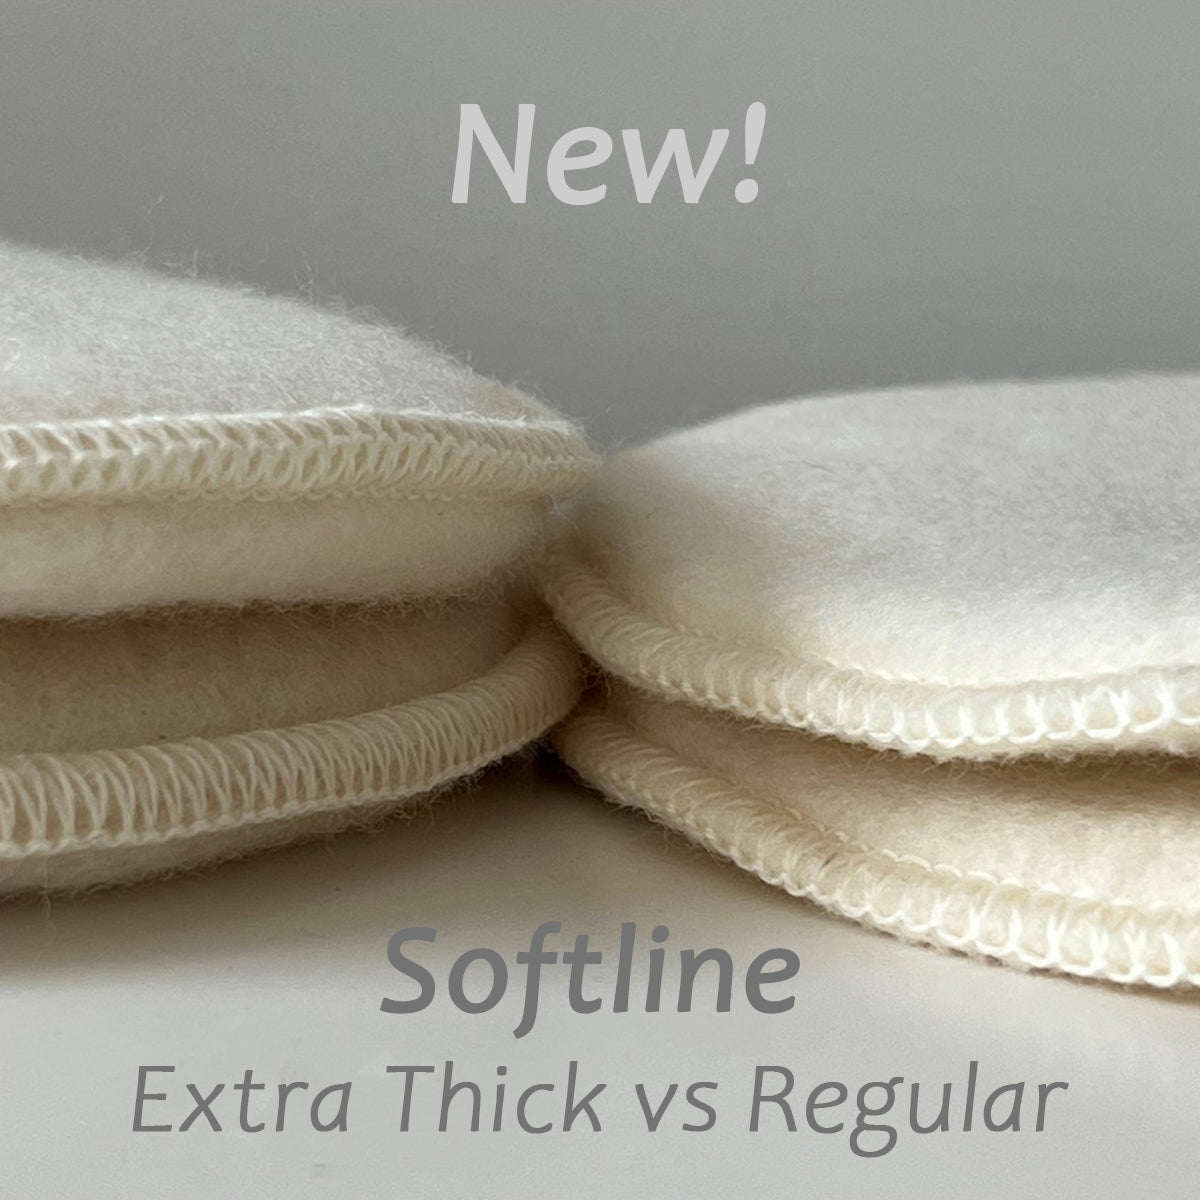  Soothingly Soft Merino Wool Nursing Pads, Style Softline,  Extra Thickness, 5 in. Diameter (XS) : Nursing Bra Pads : Baby